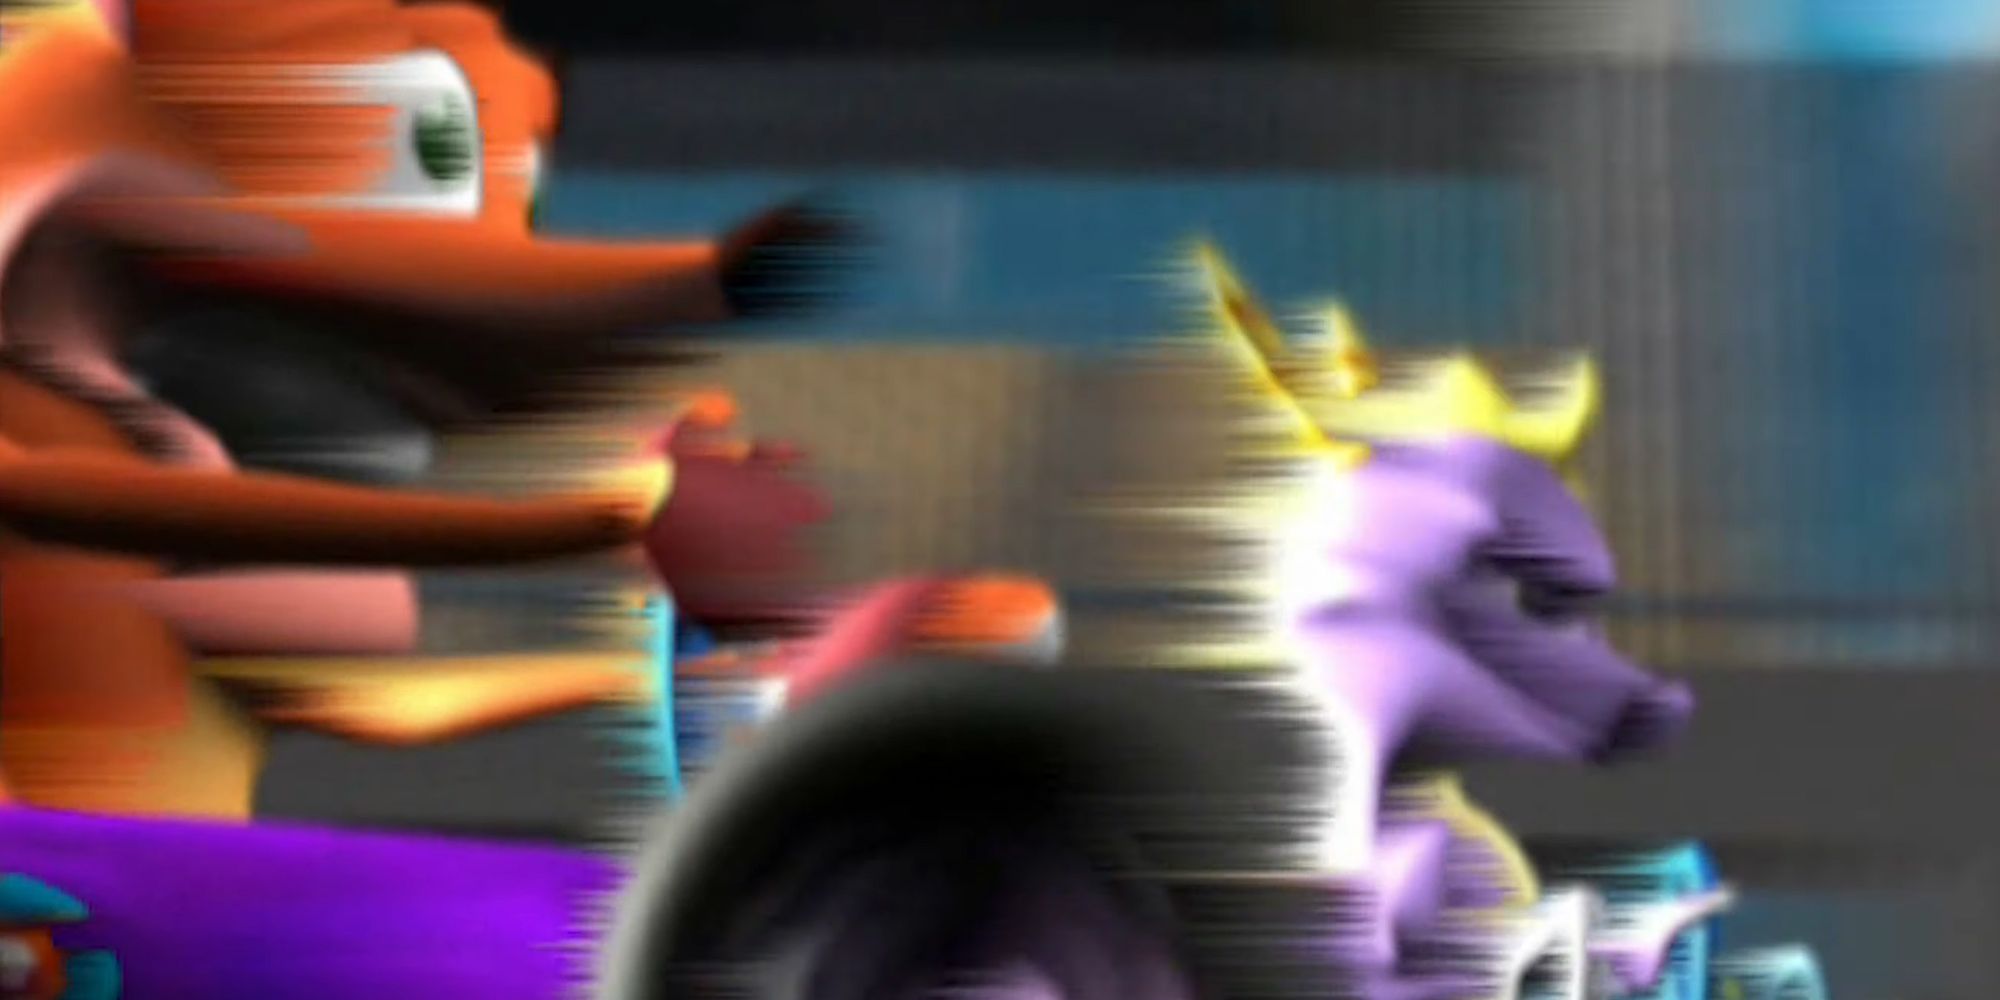 Crash vs Spyro Racing screenshot showing the two side-by-side